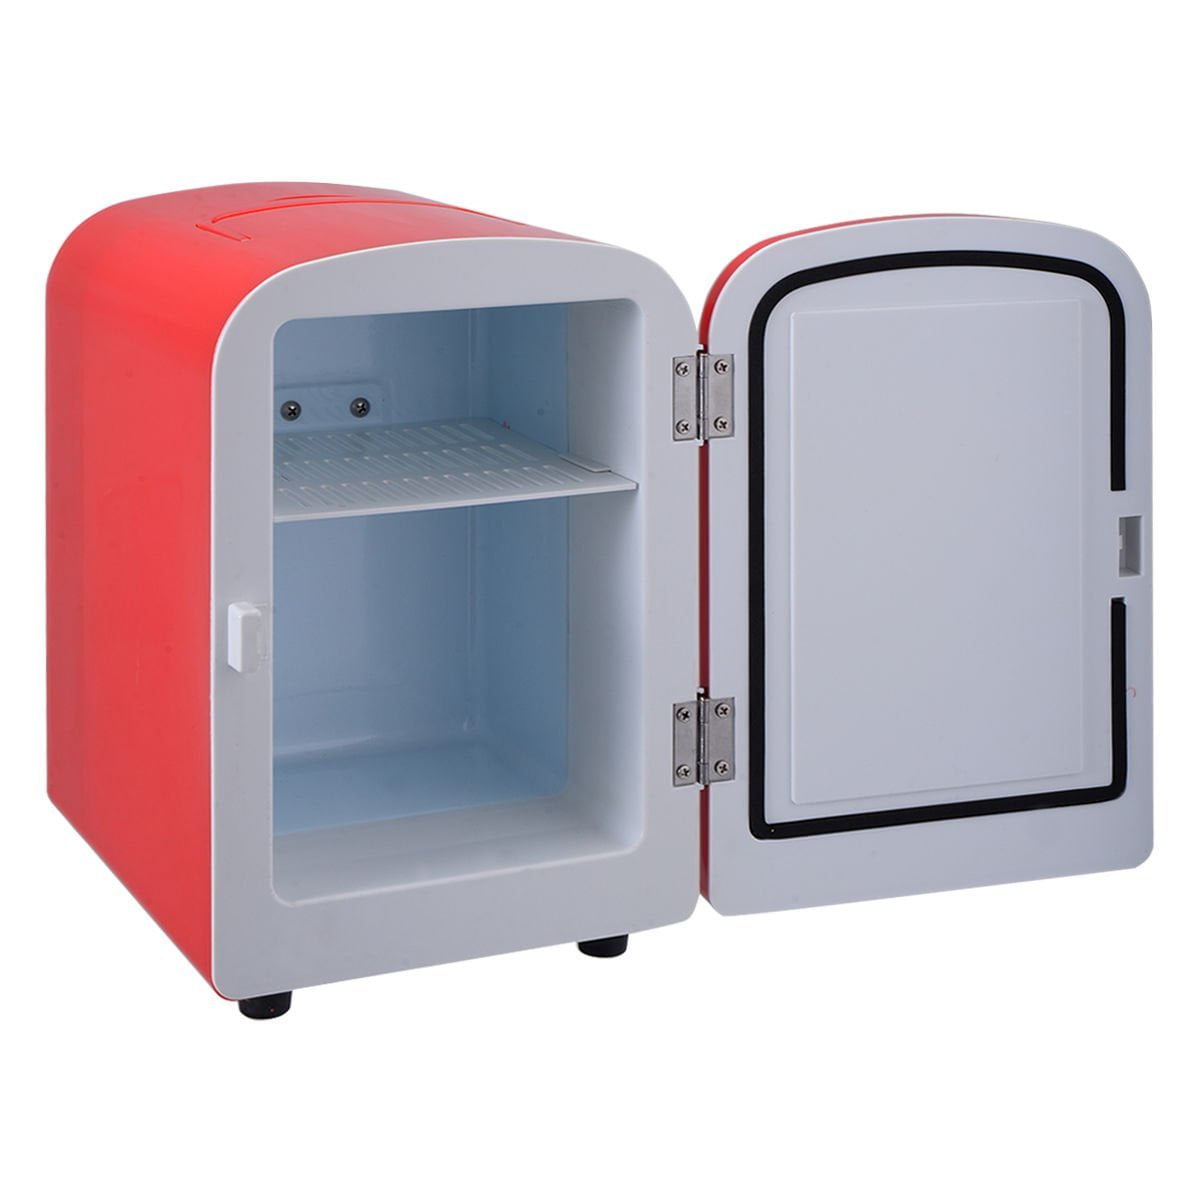 Fridge Mini Cooler Portable Cool Compact Refrigerator Home Office Dorm Car Boat 